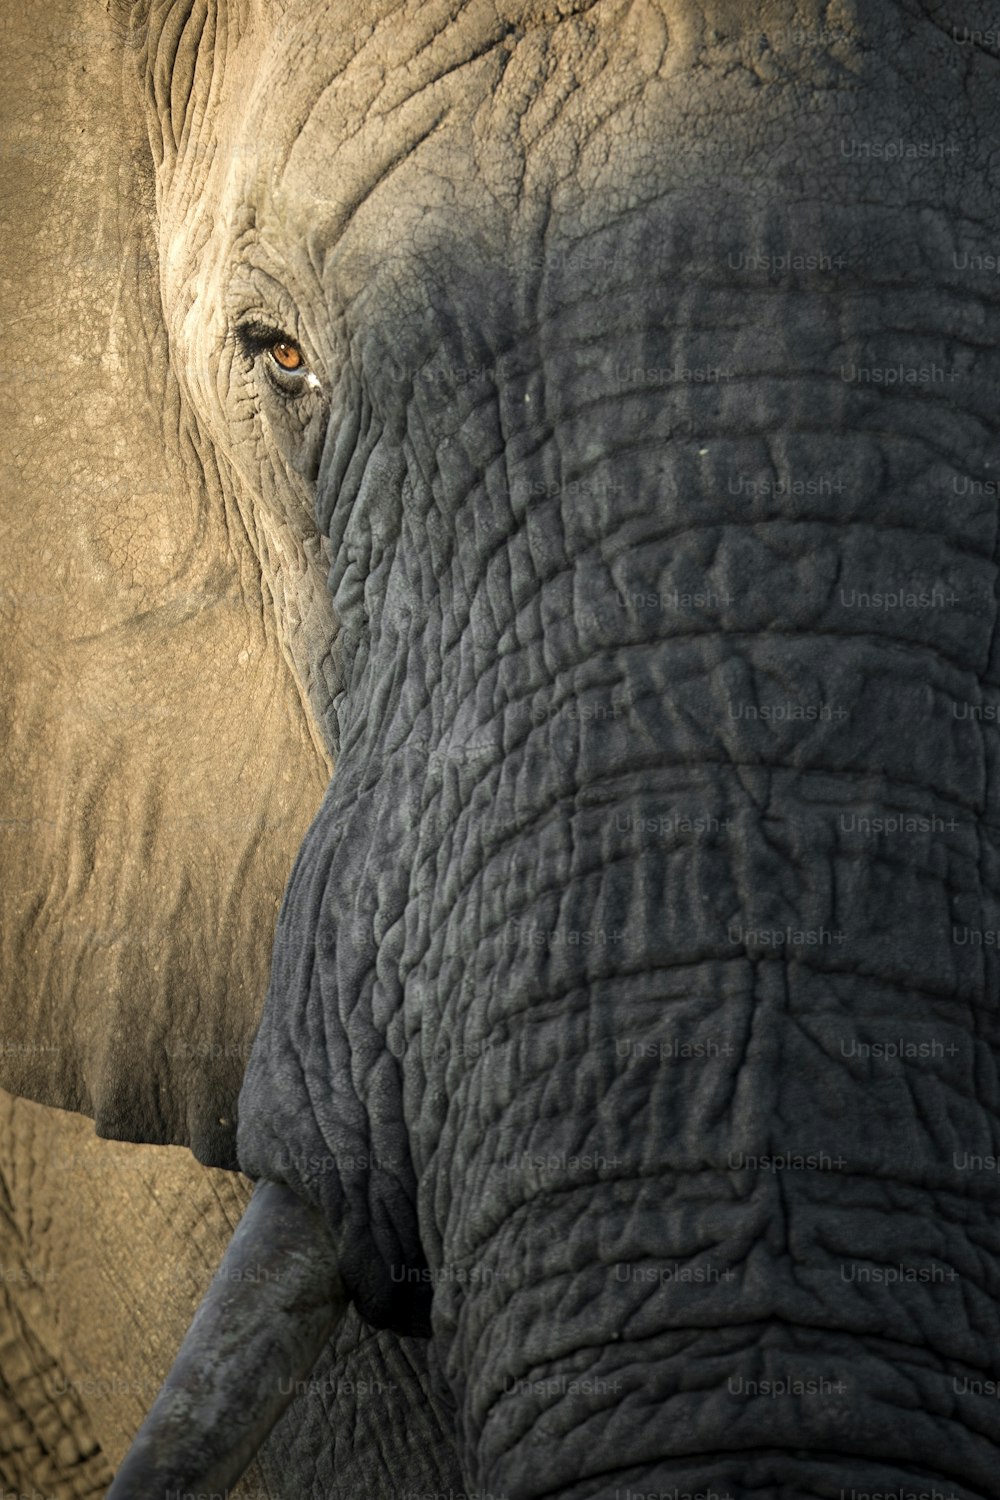 A close up portrait of an Elephant.